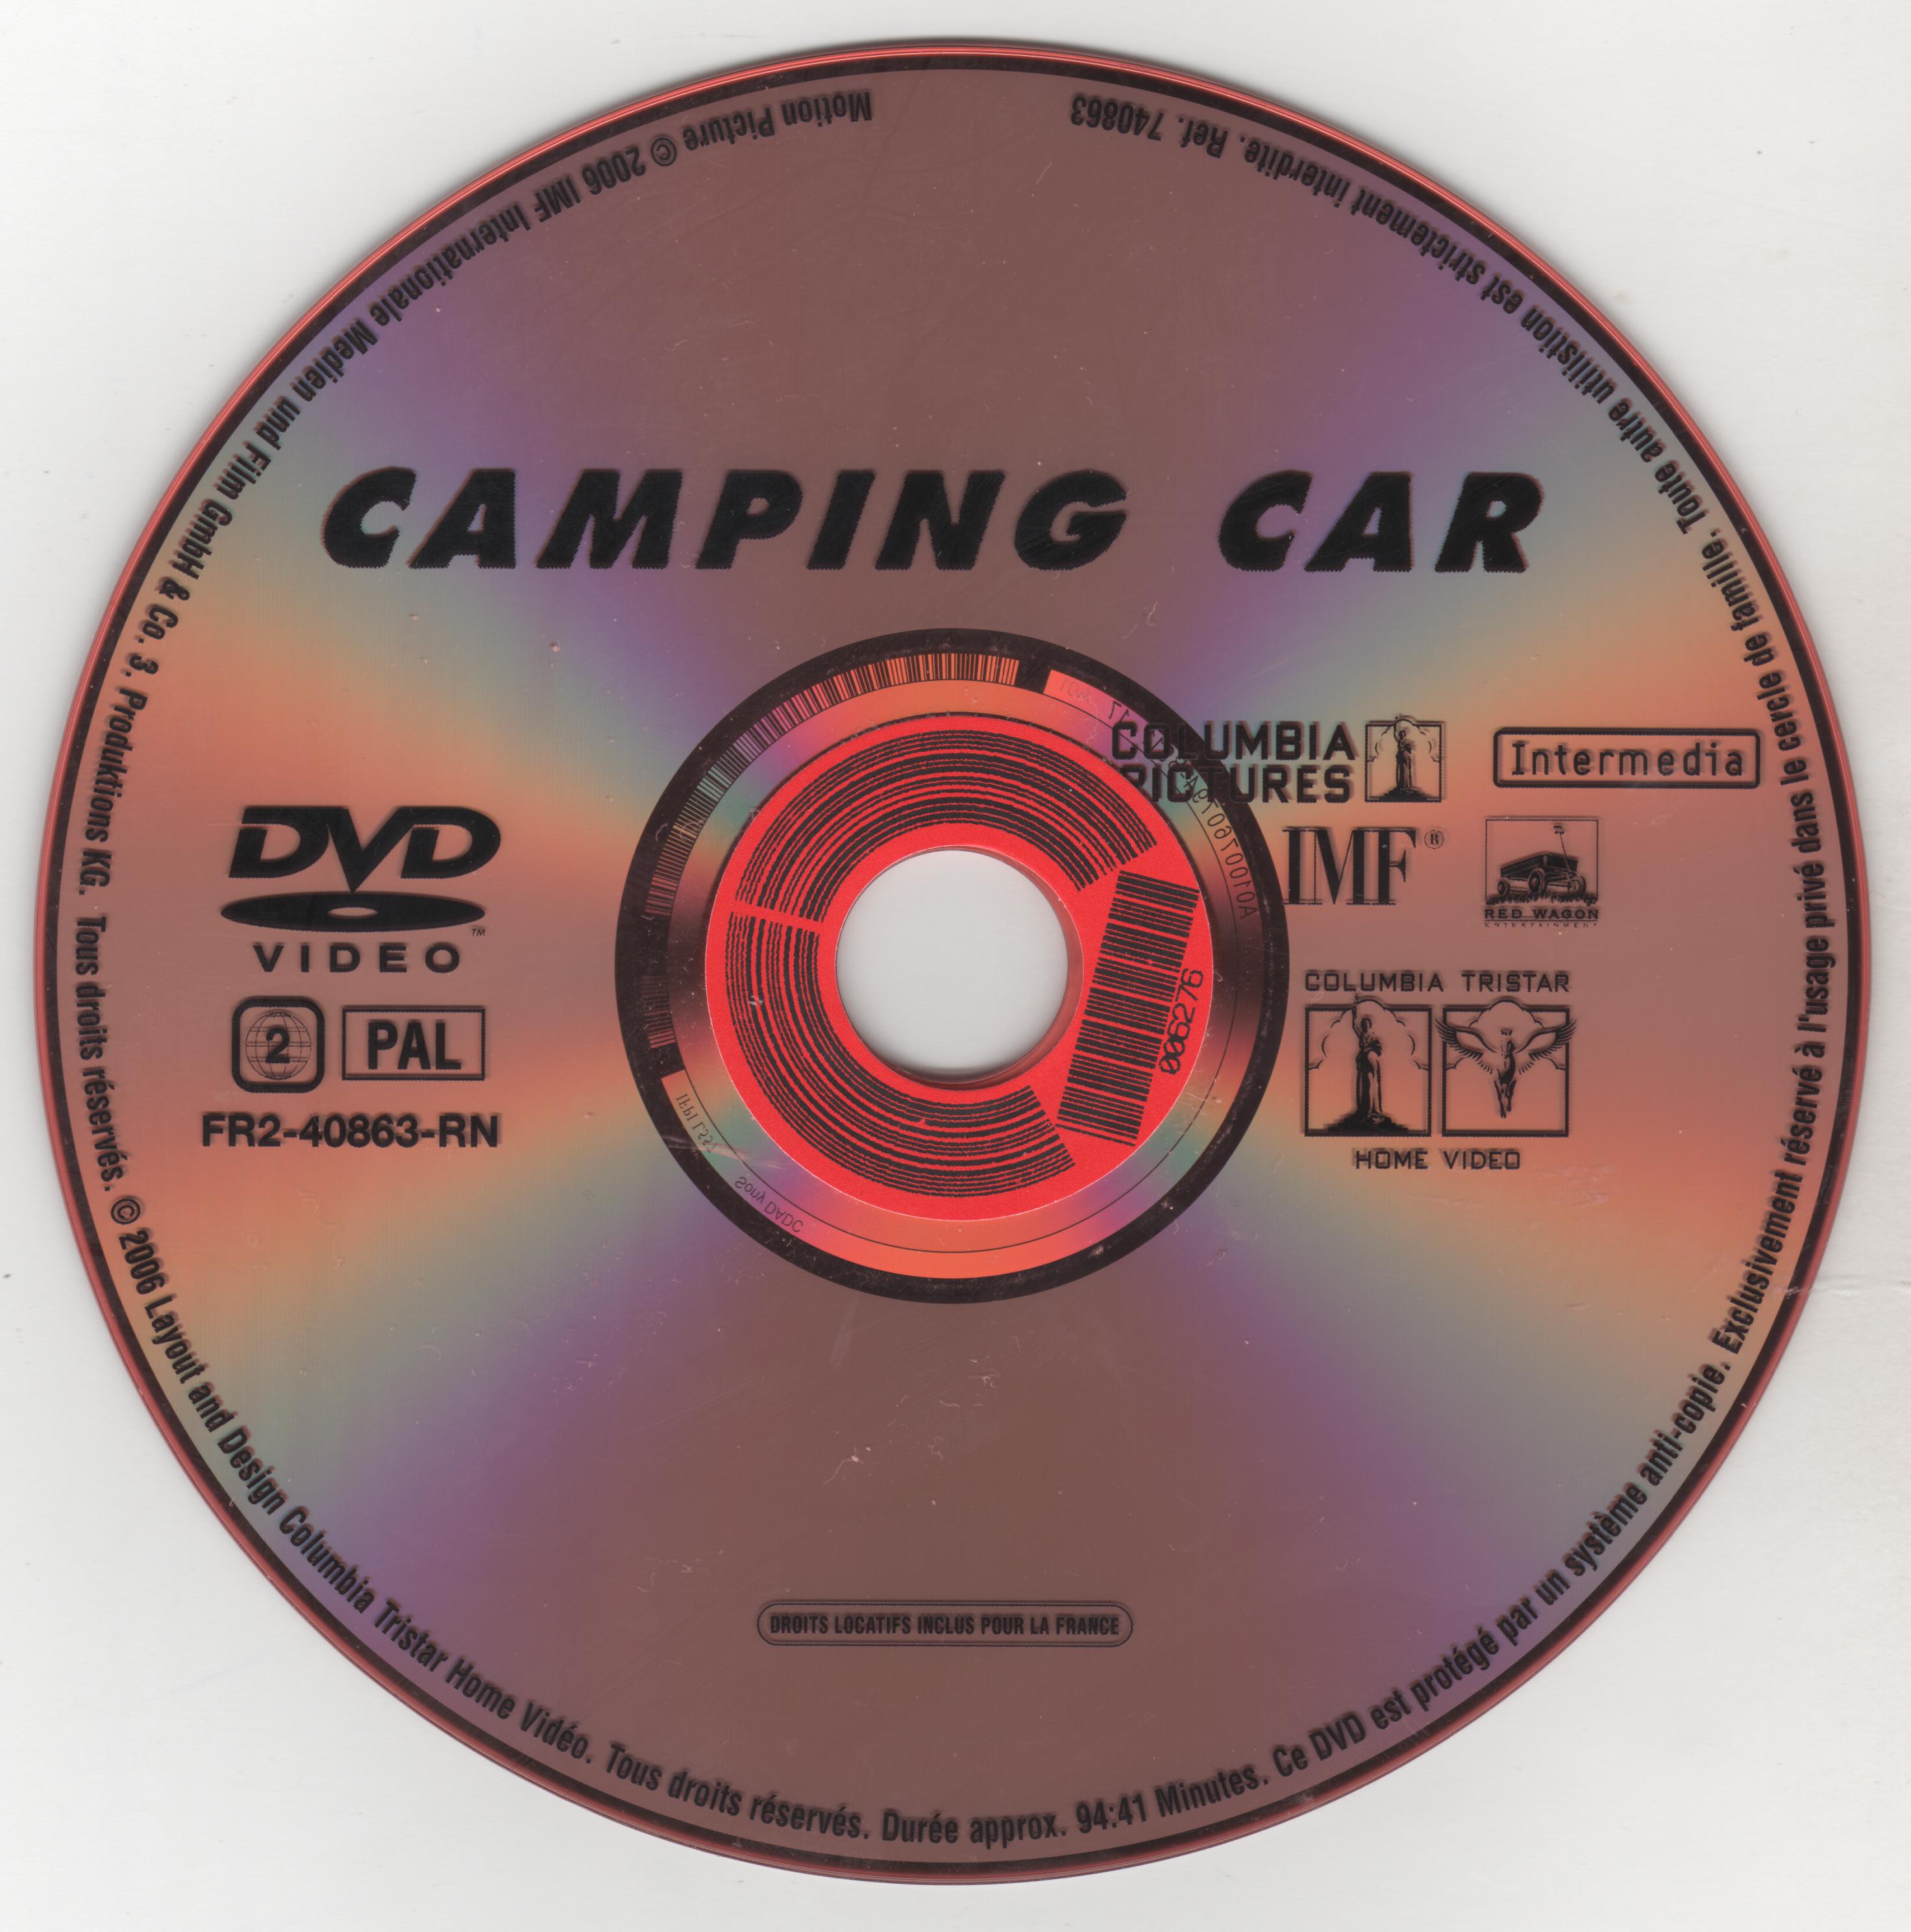 Camping car v2